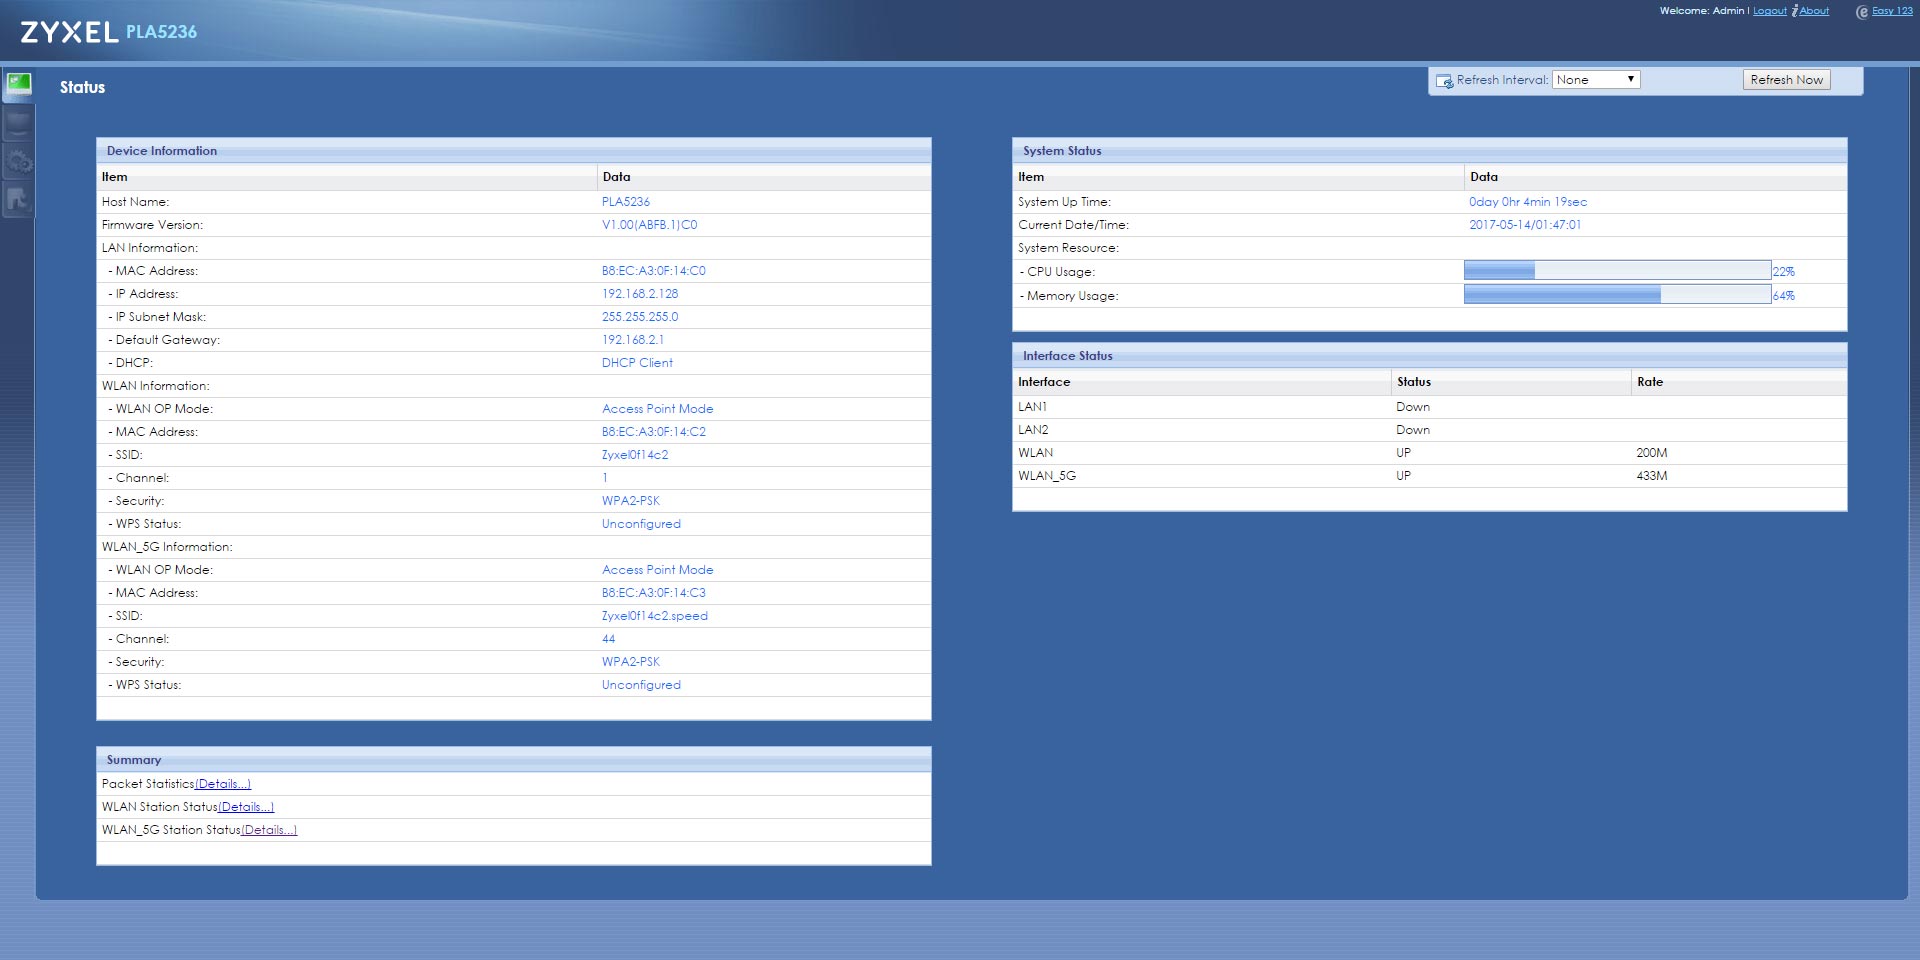 Zyxel-PLA5236-admin-screenshot